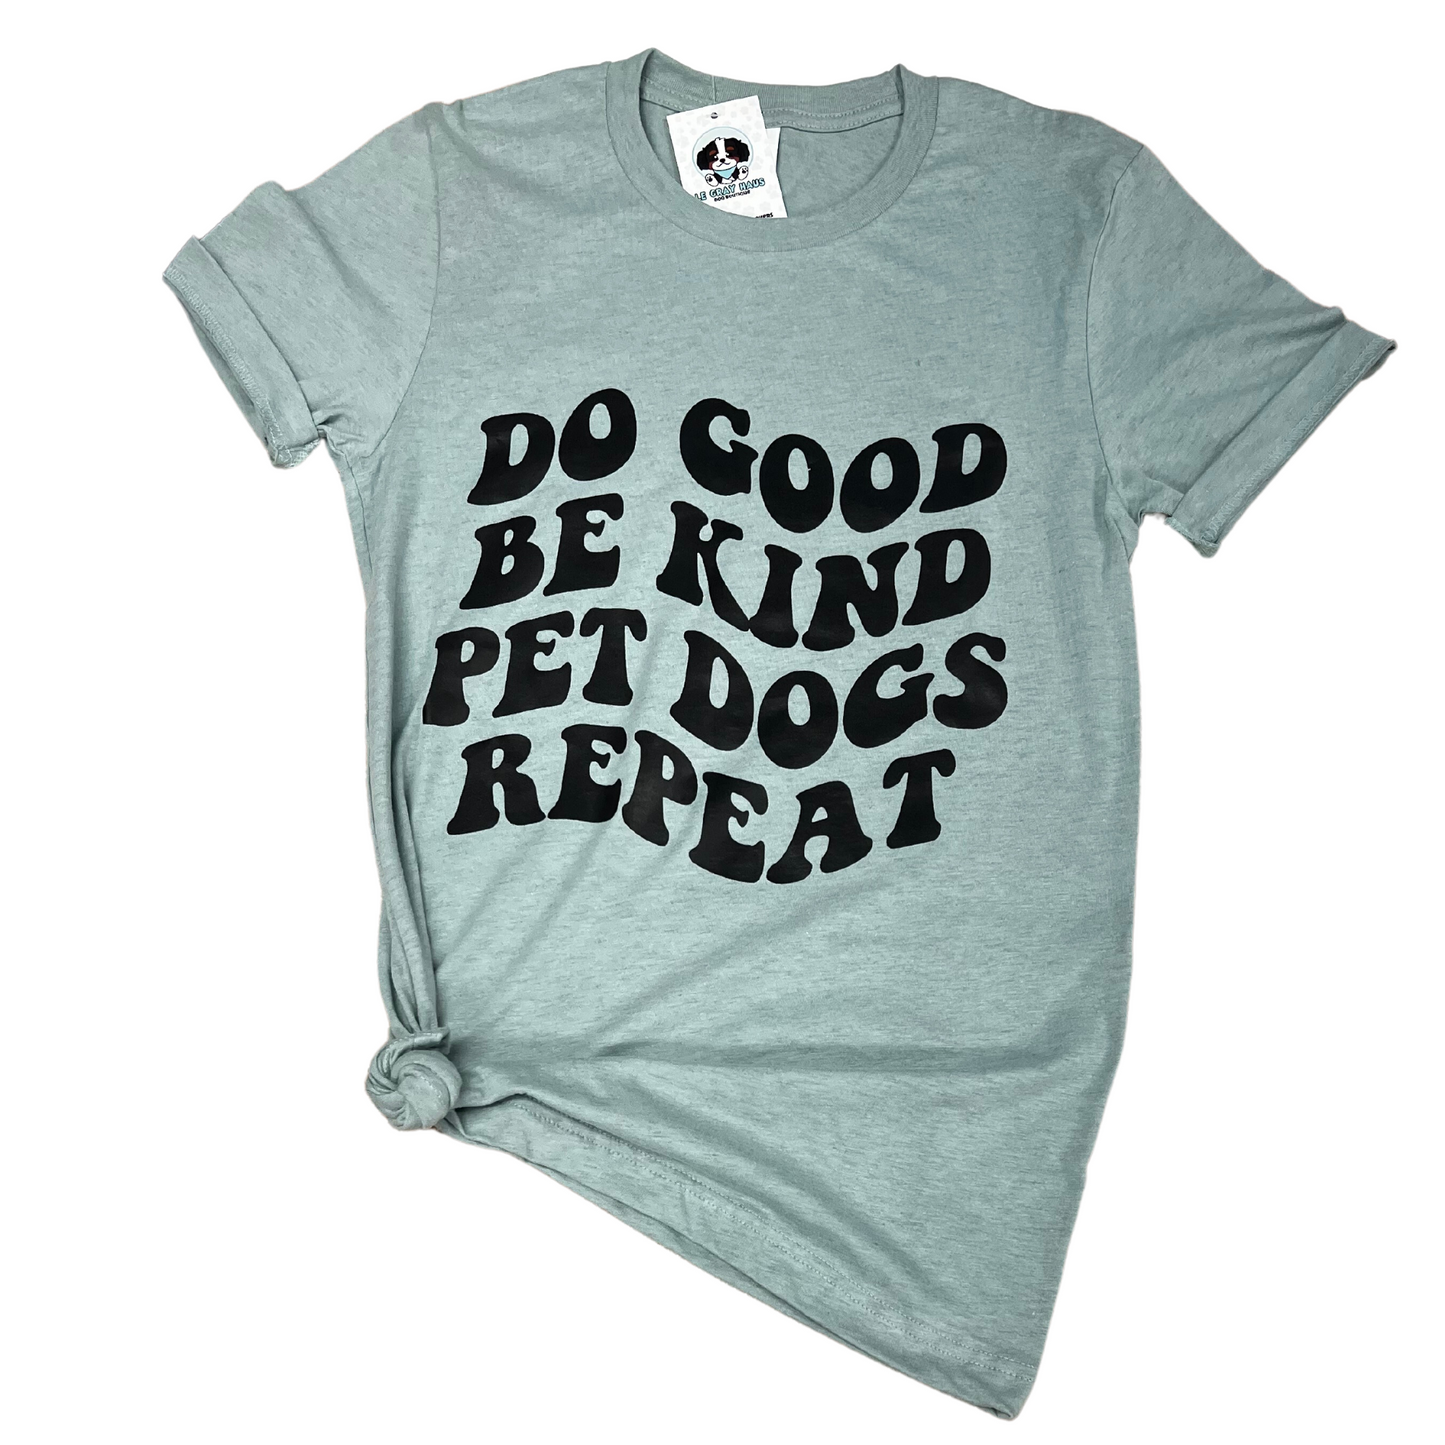 Pet Dogs T-Shirt